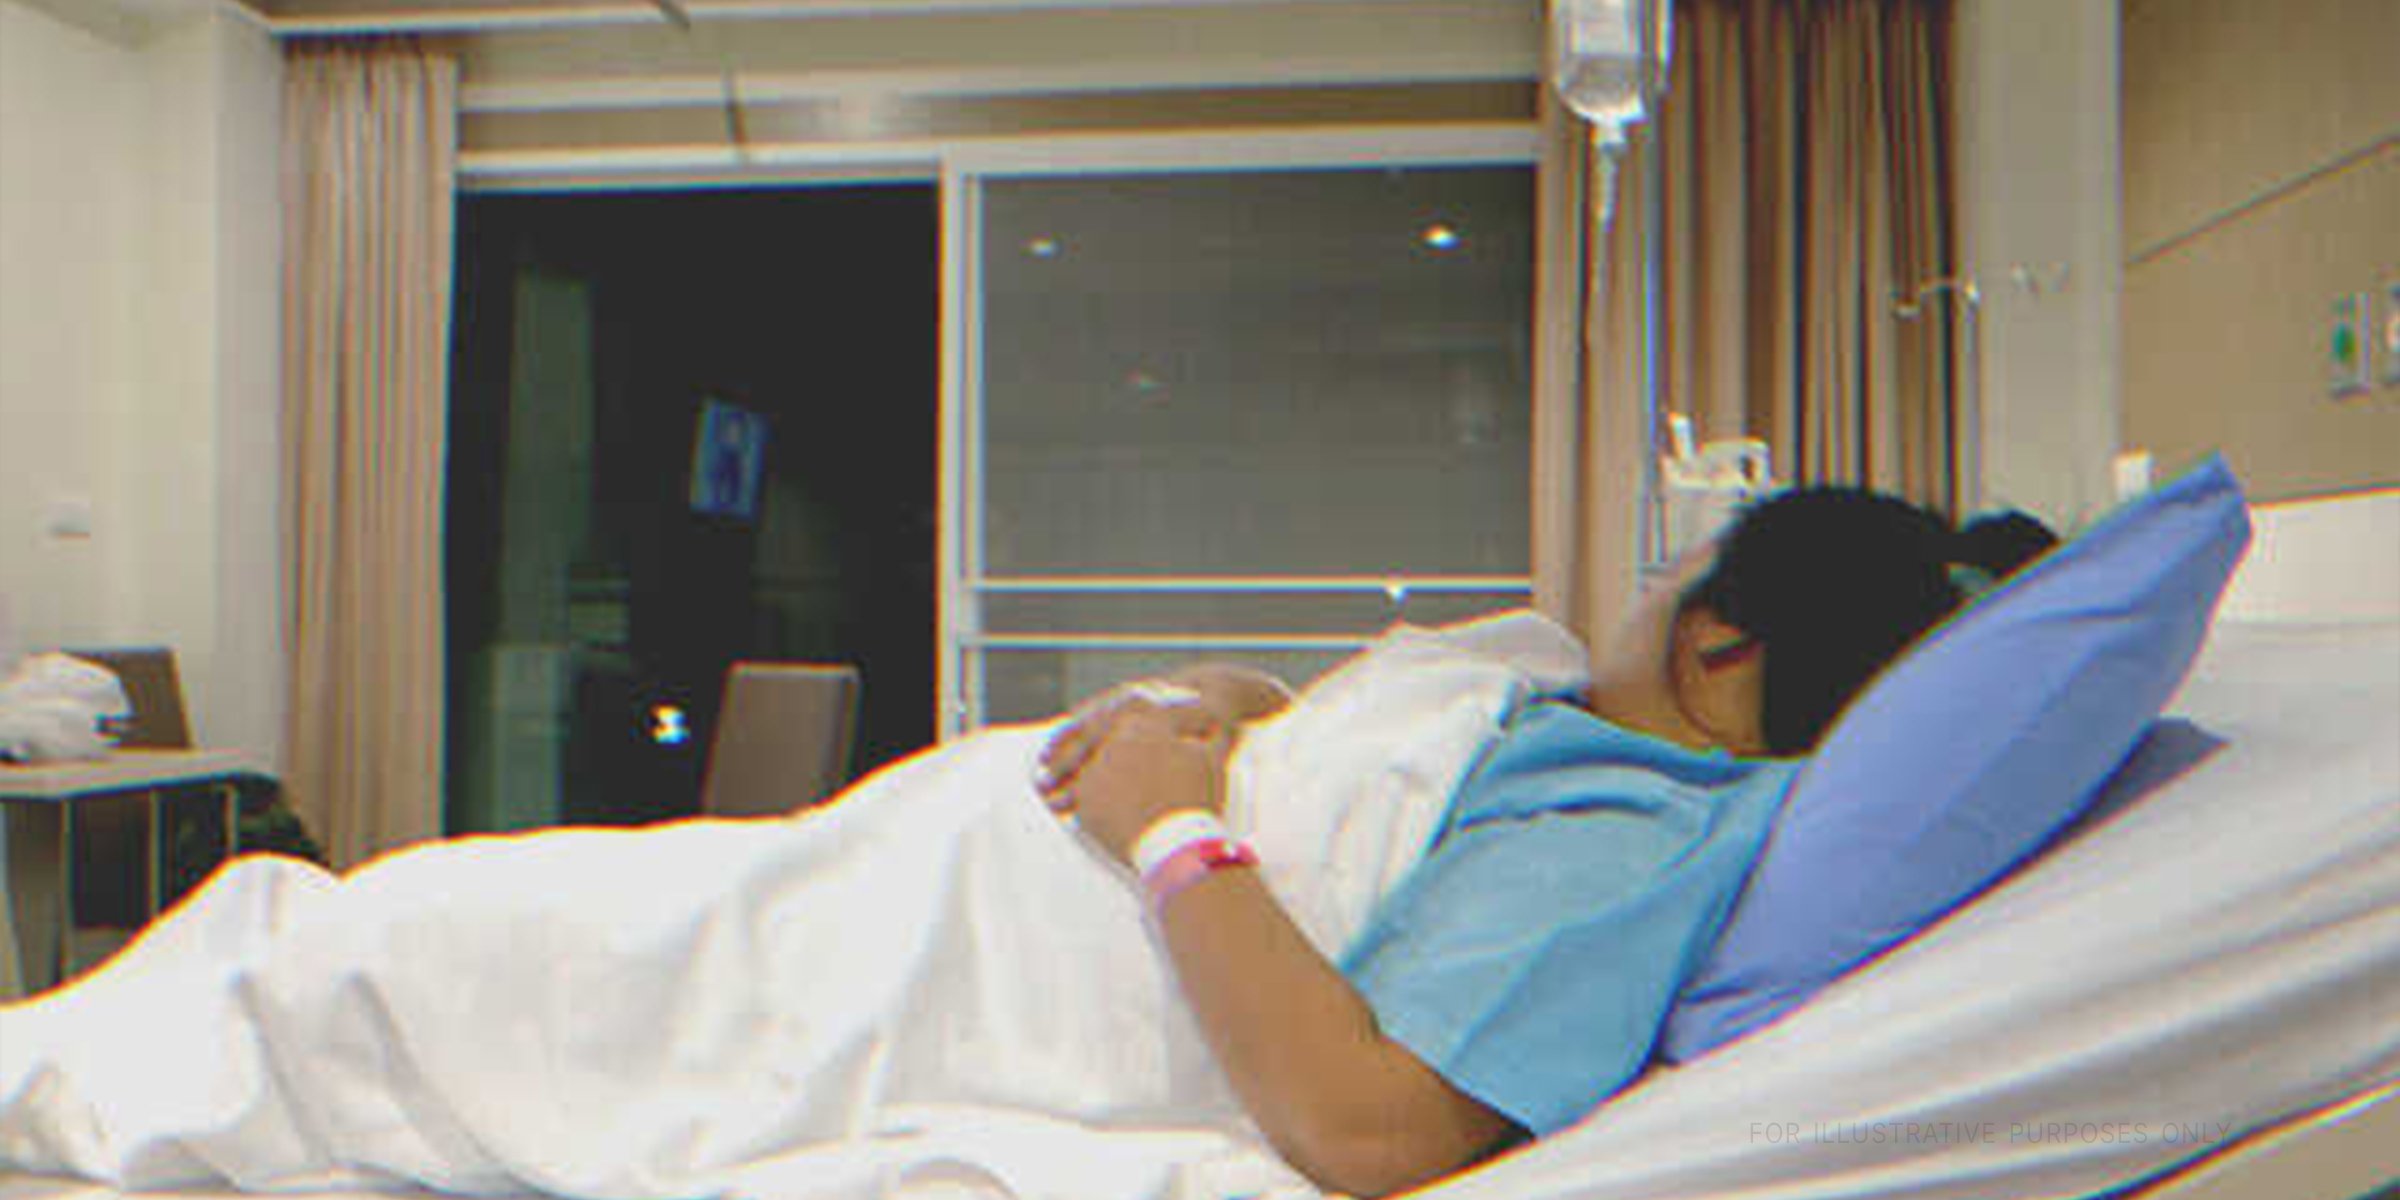 Woman in hospital bed | Source: Shutterstock